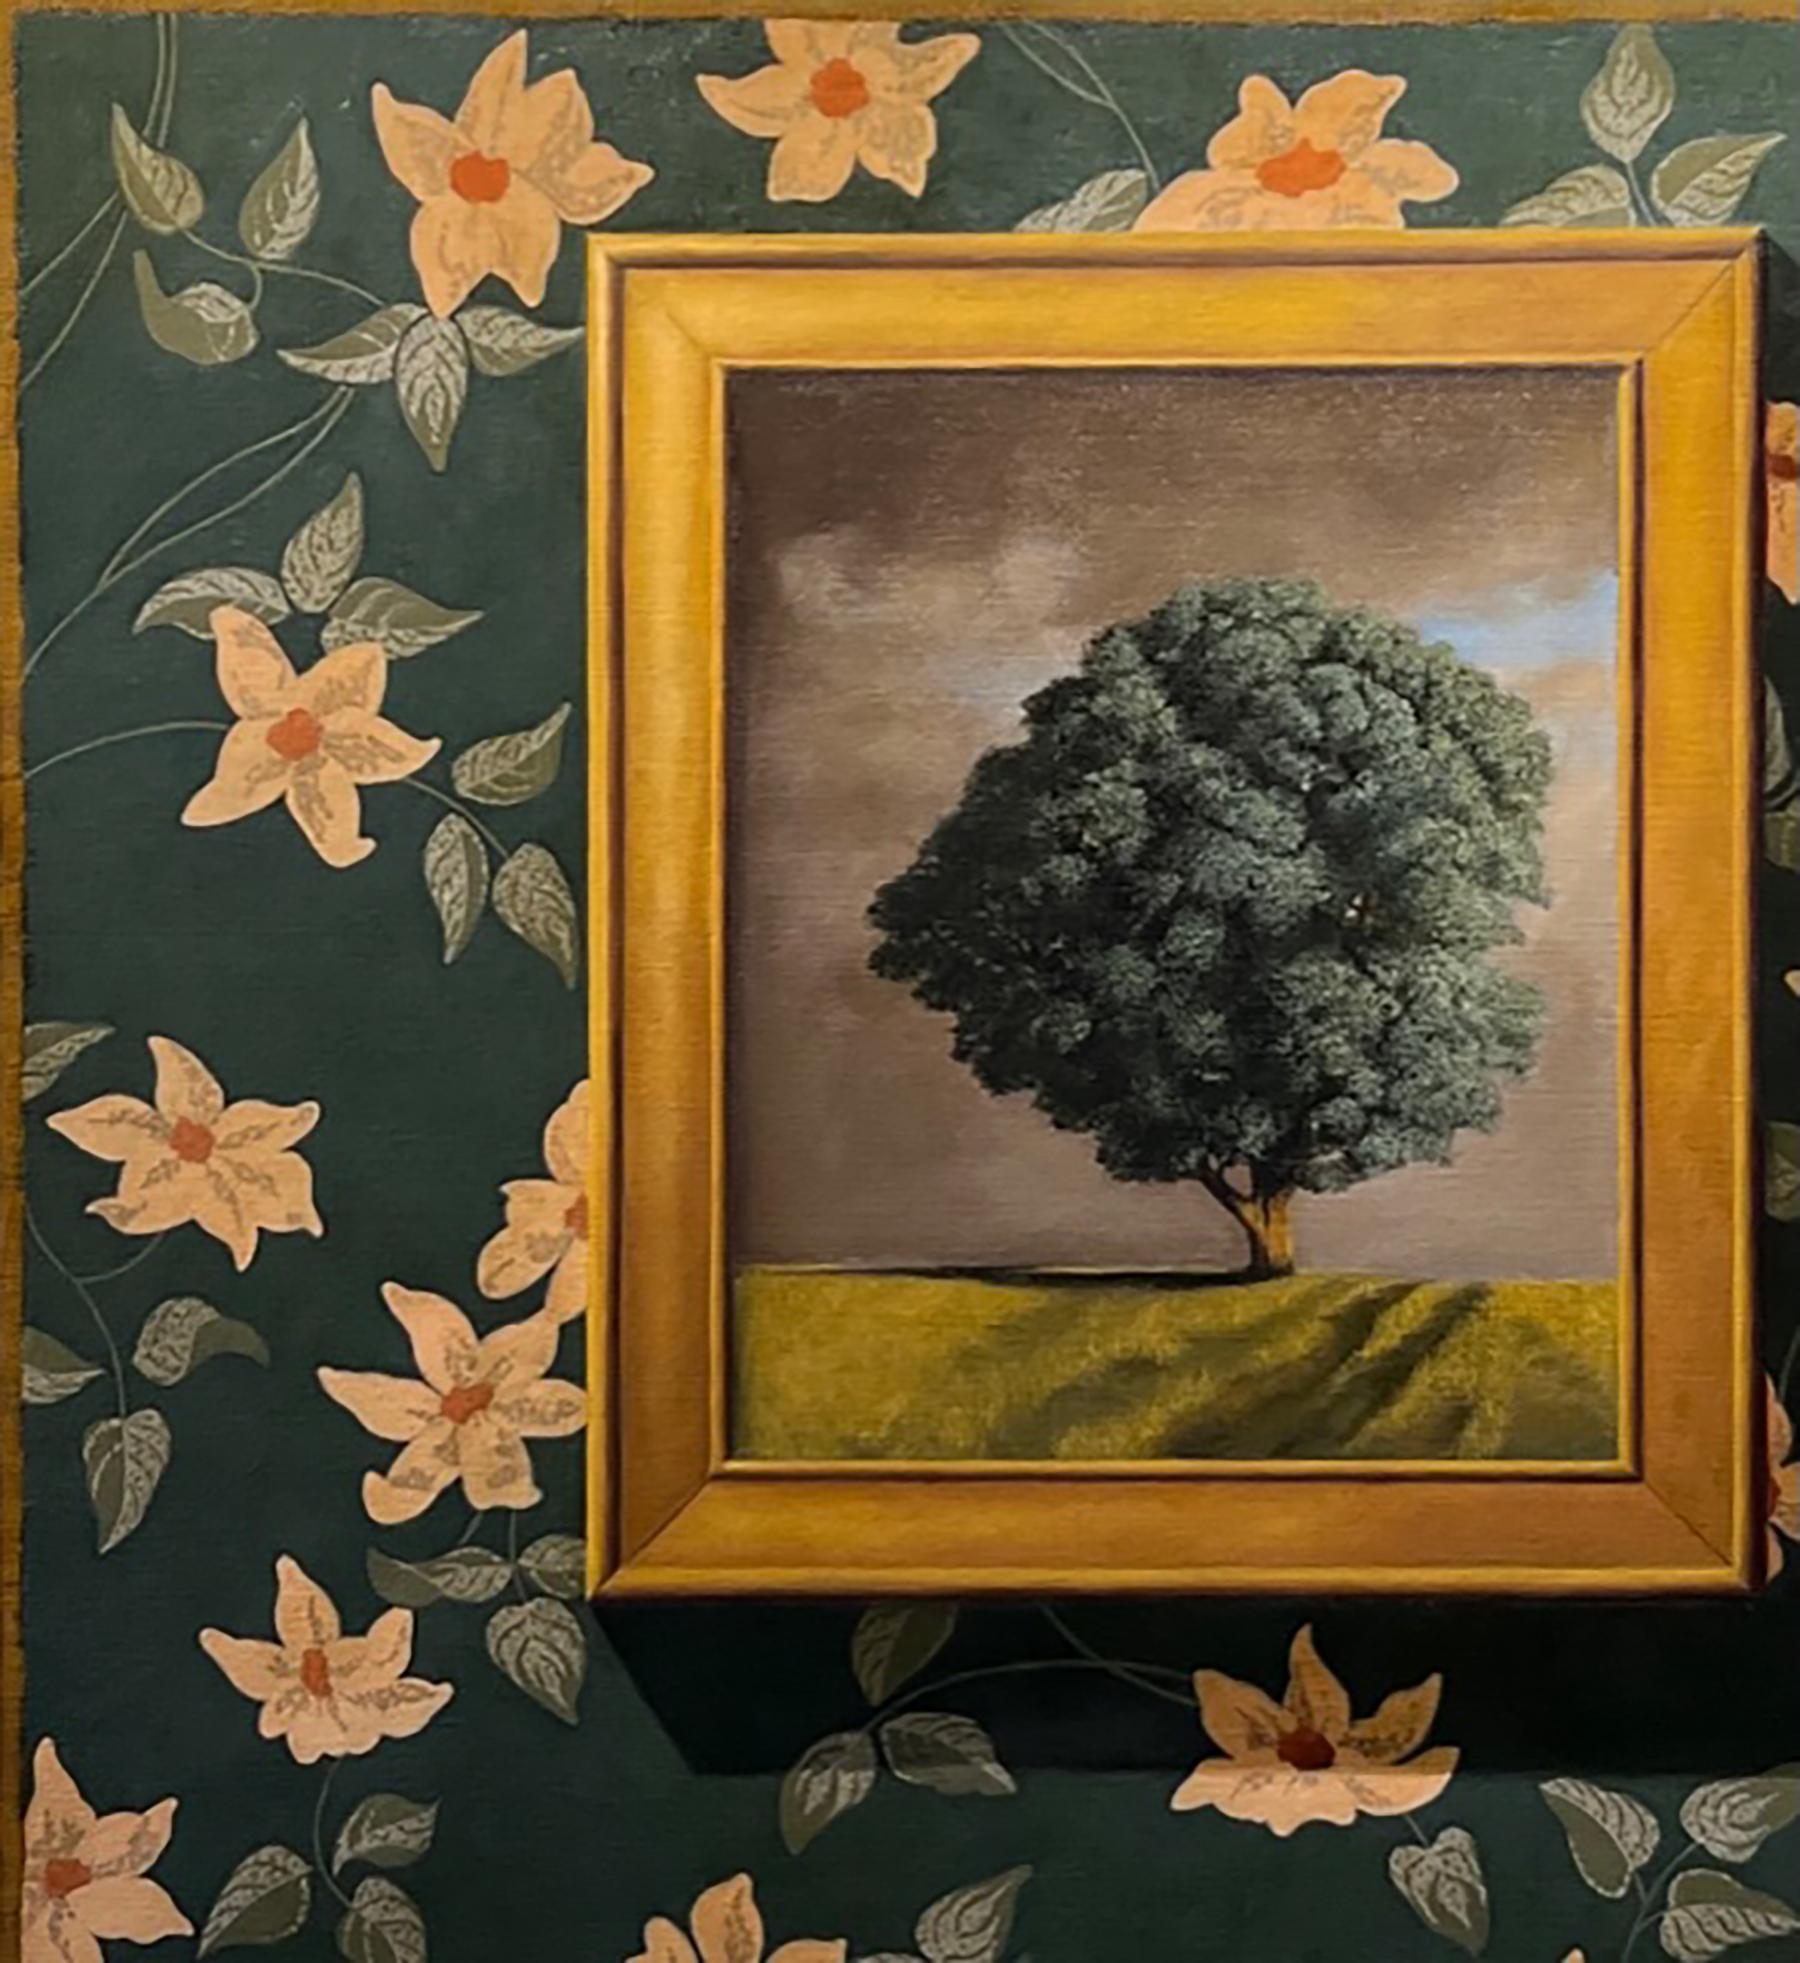 Edward Butler Landscape Painting - WALLPAPER, FRAME, TREE - Realism / Trompe L'œil / Landscape / Still Life